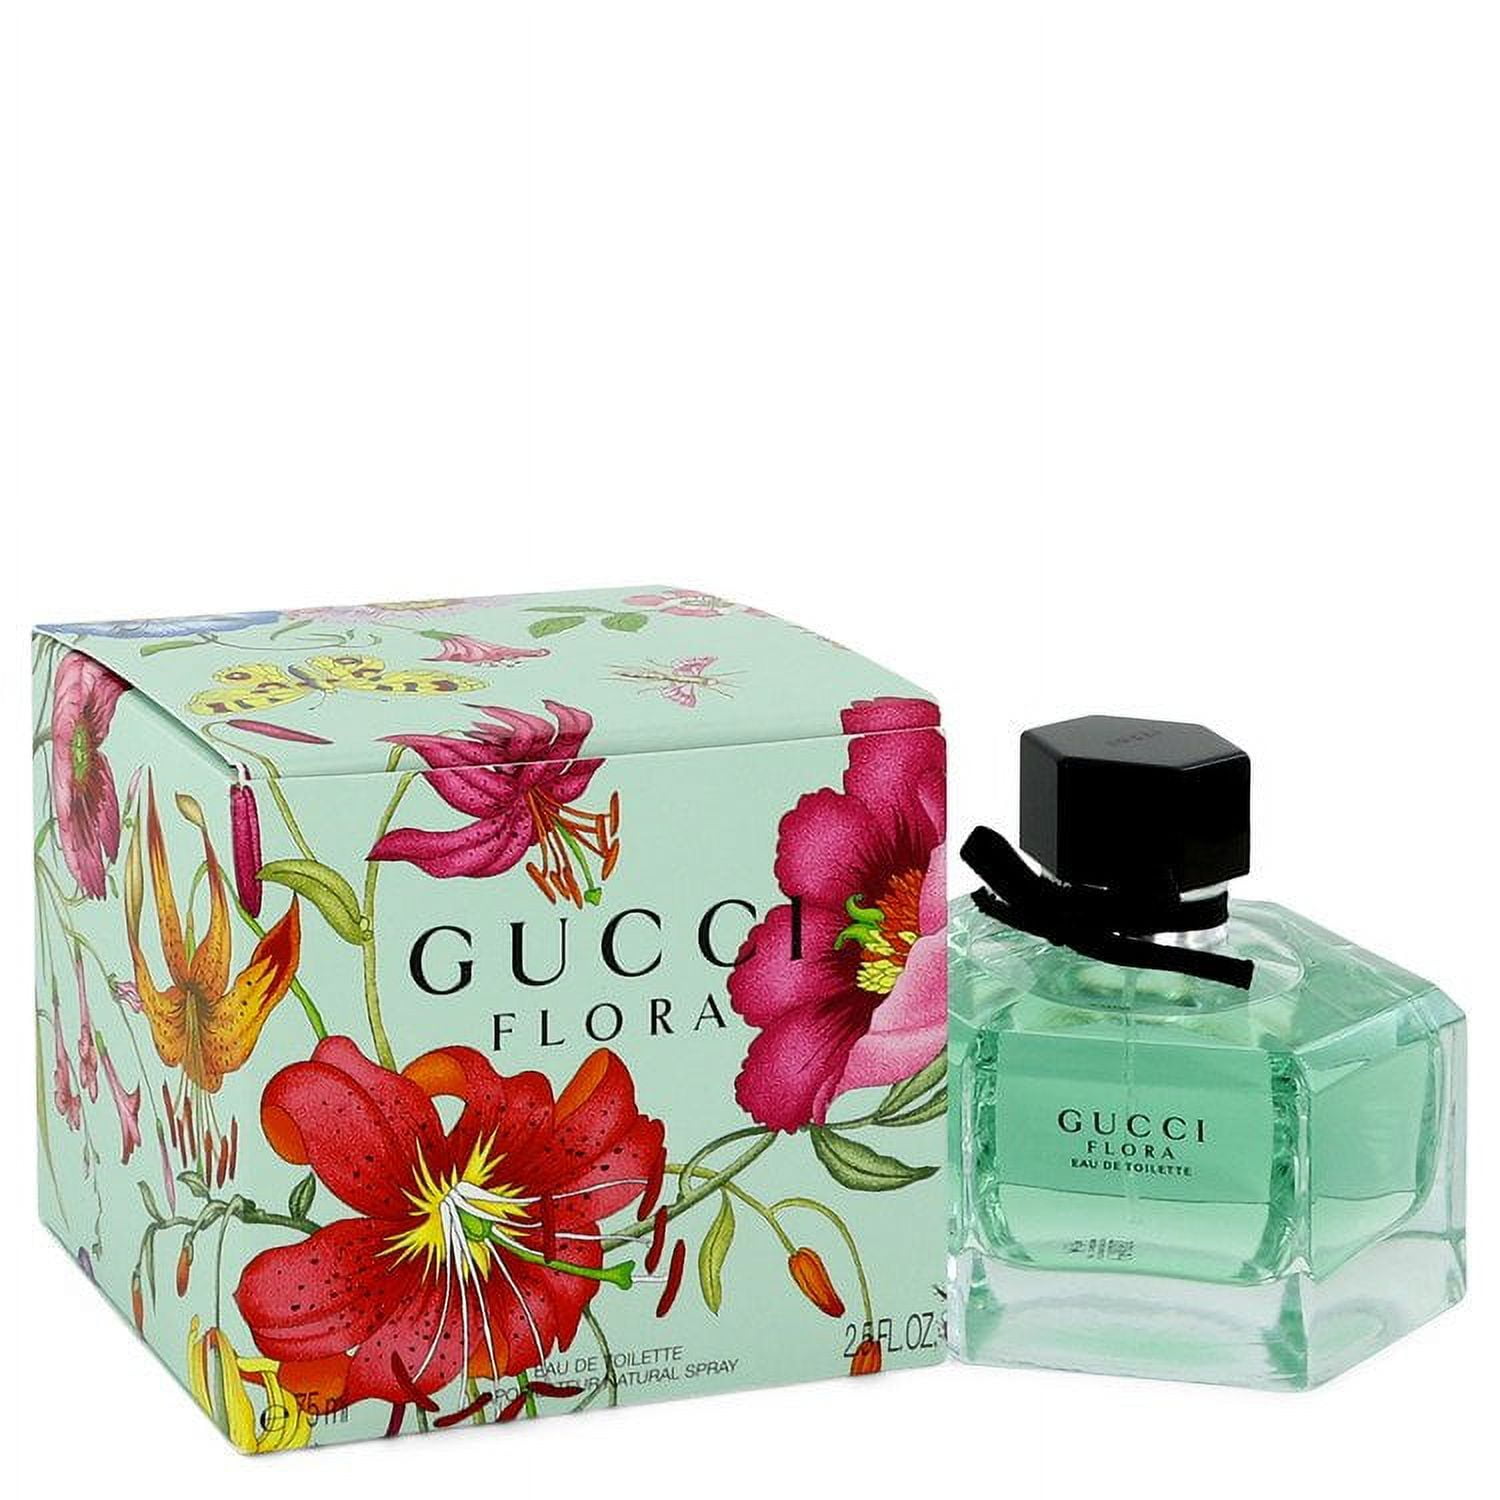 Nogen Overdreven ledig stilling Flora Perfume by Gucci, Flora, 2.5 oz Eau De Toilette Spray - Walmart.com